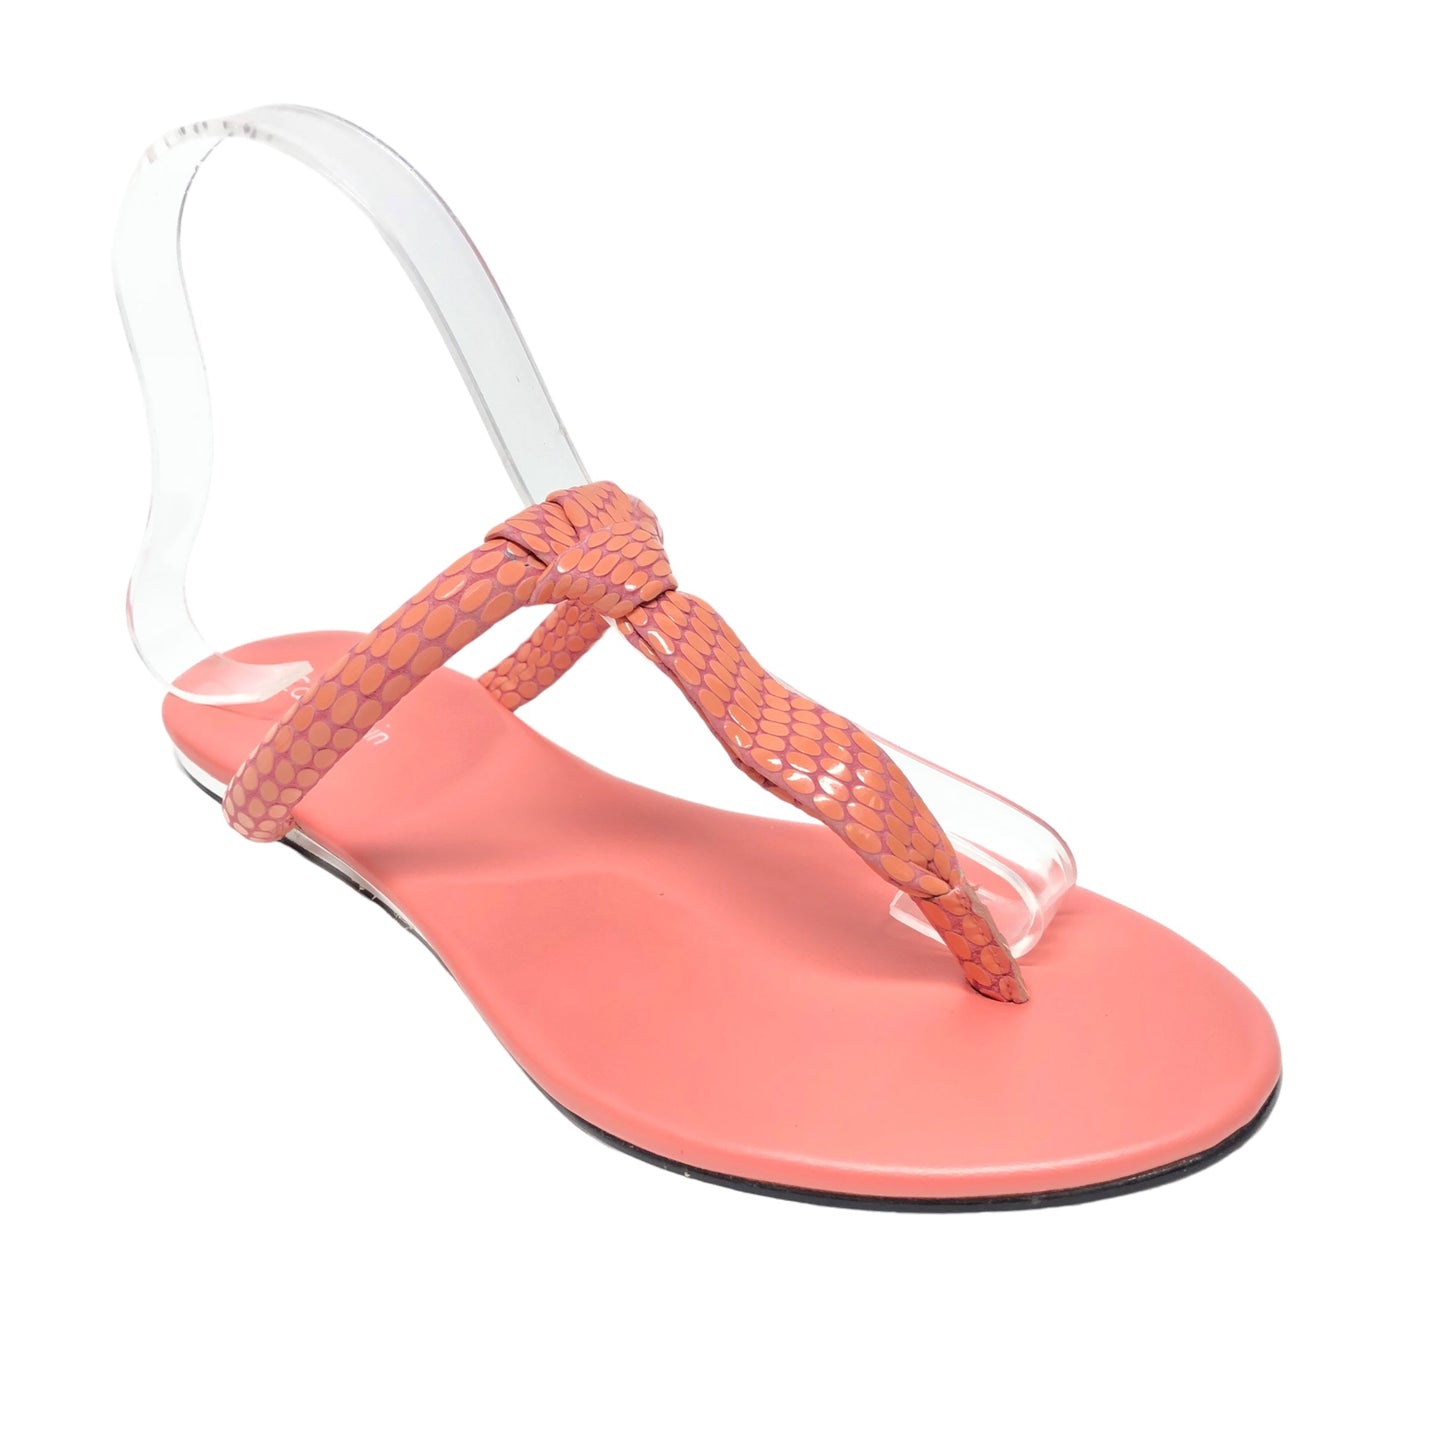 Coral Sandals Flats Calvin Klein, Size 8